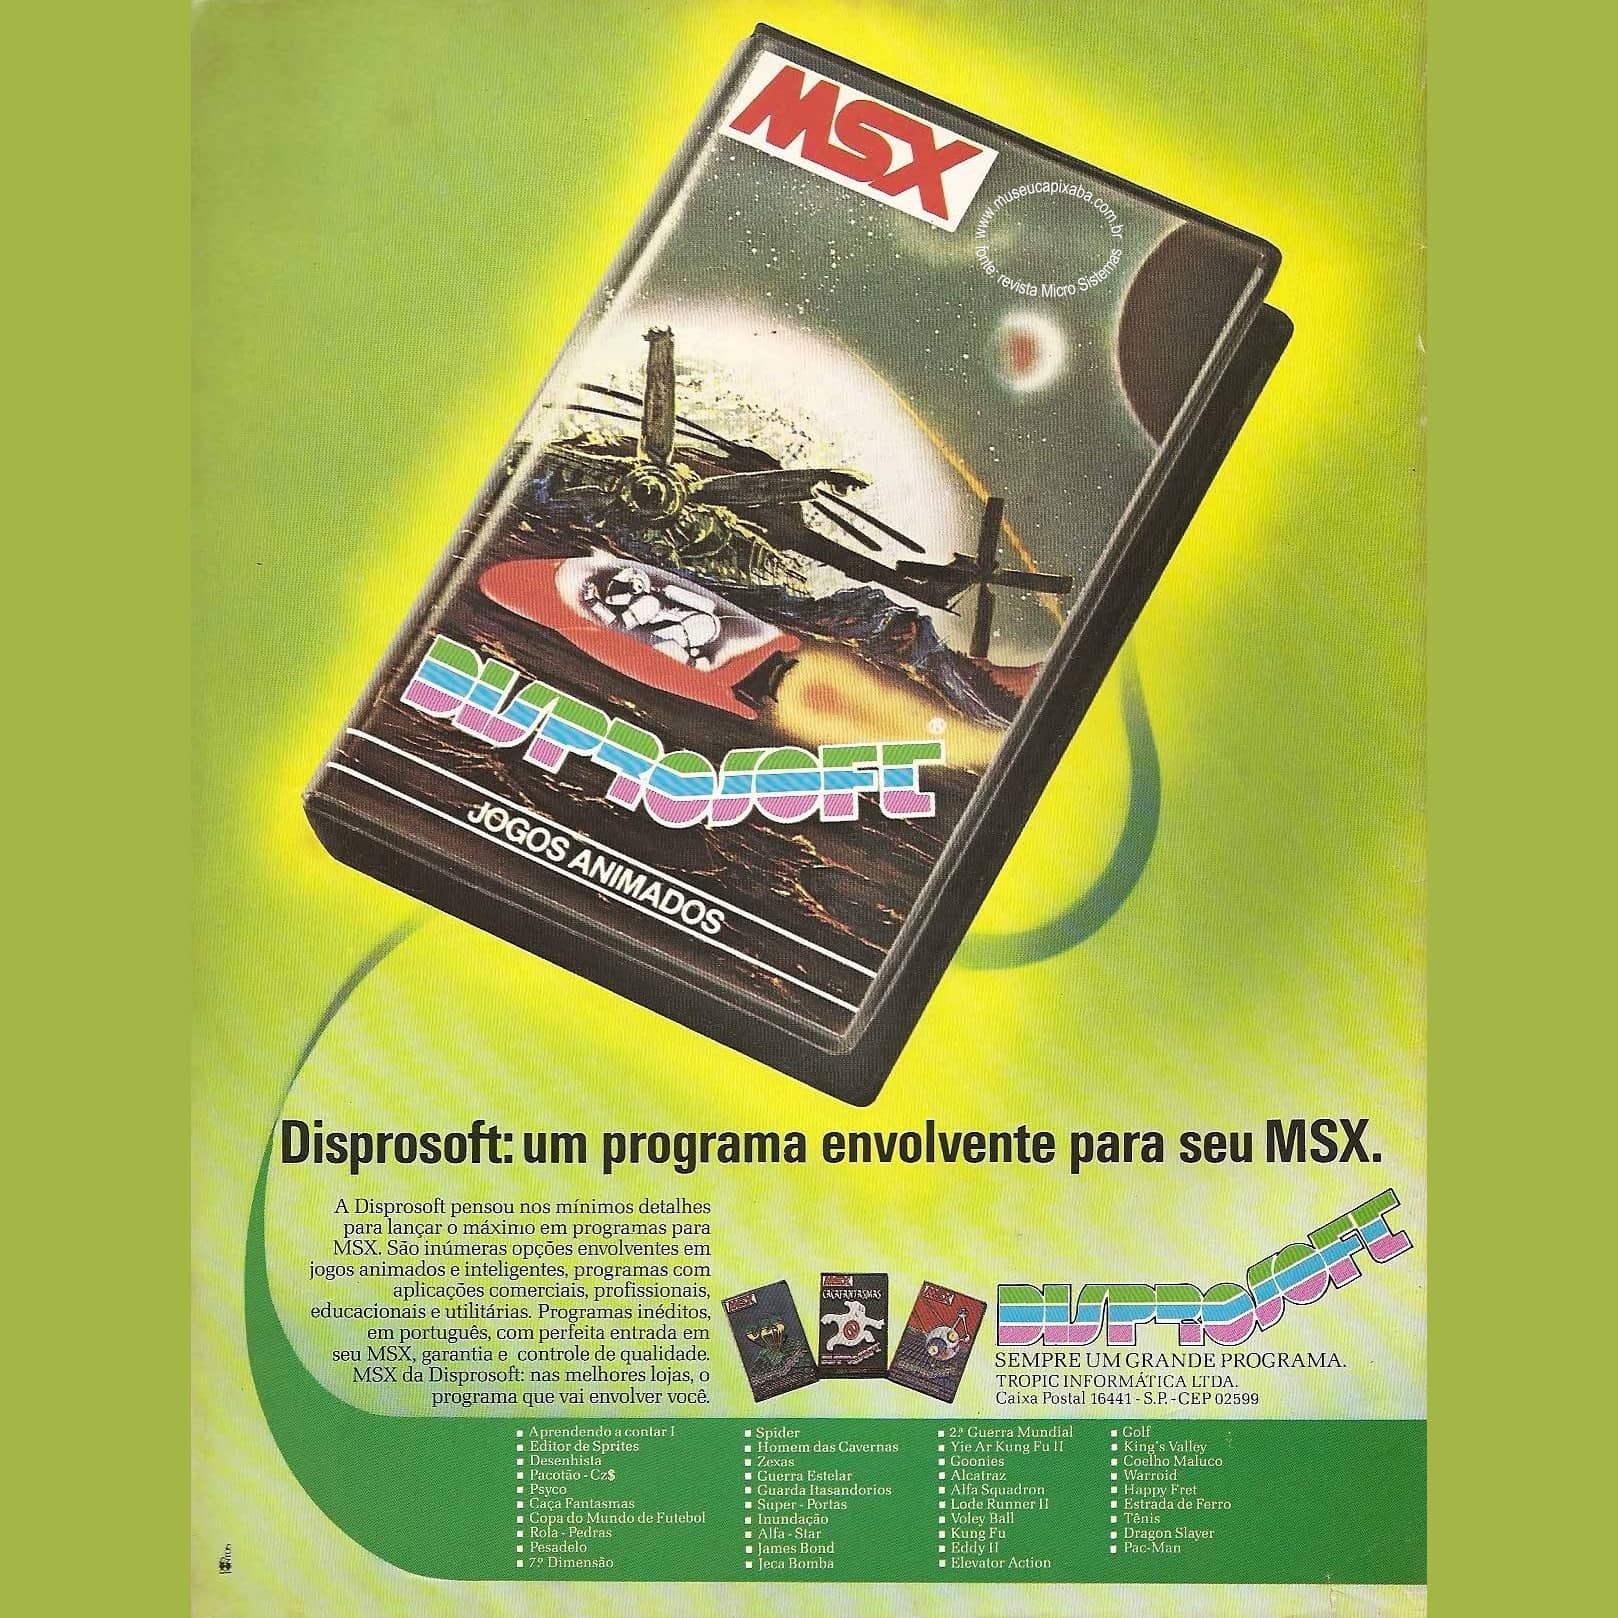 Disprosoft Programa envolvente para seu MSX Revista Microsistemas